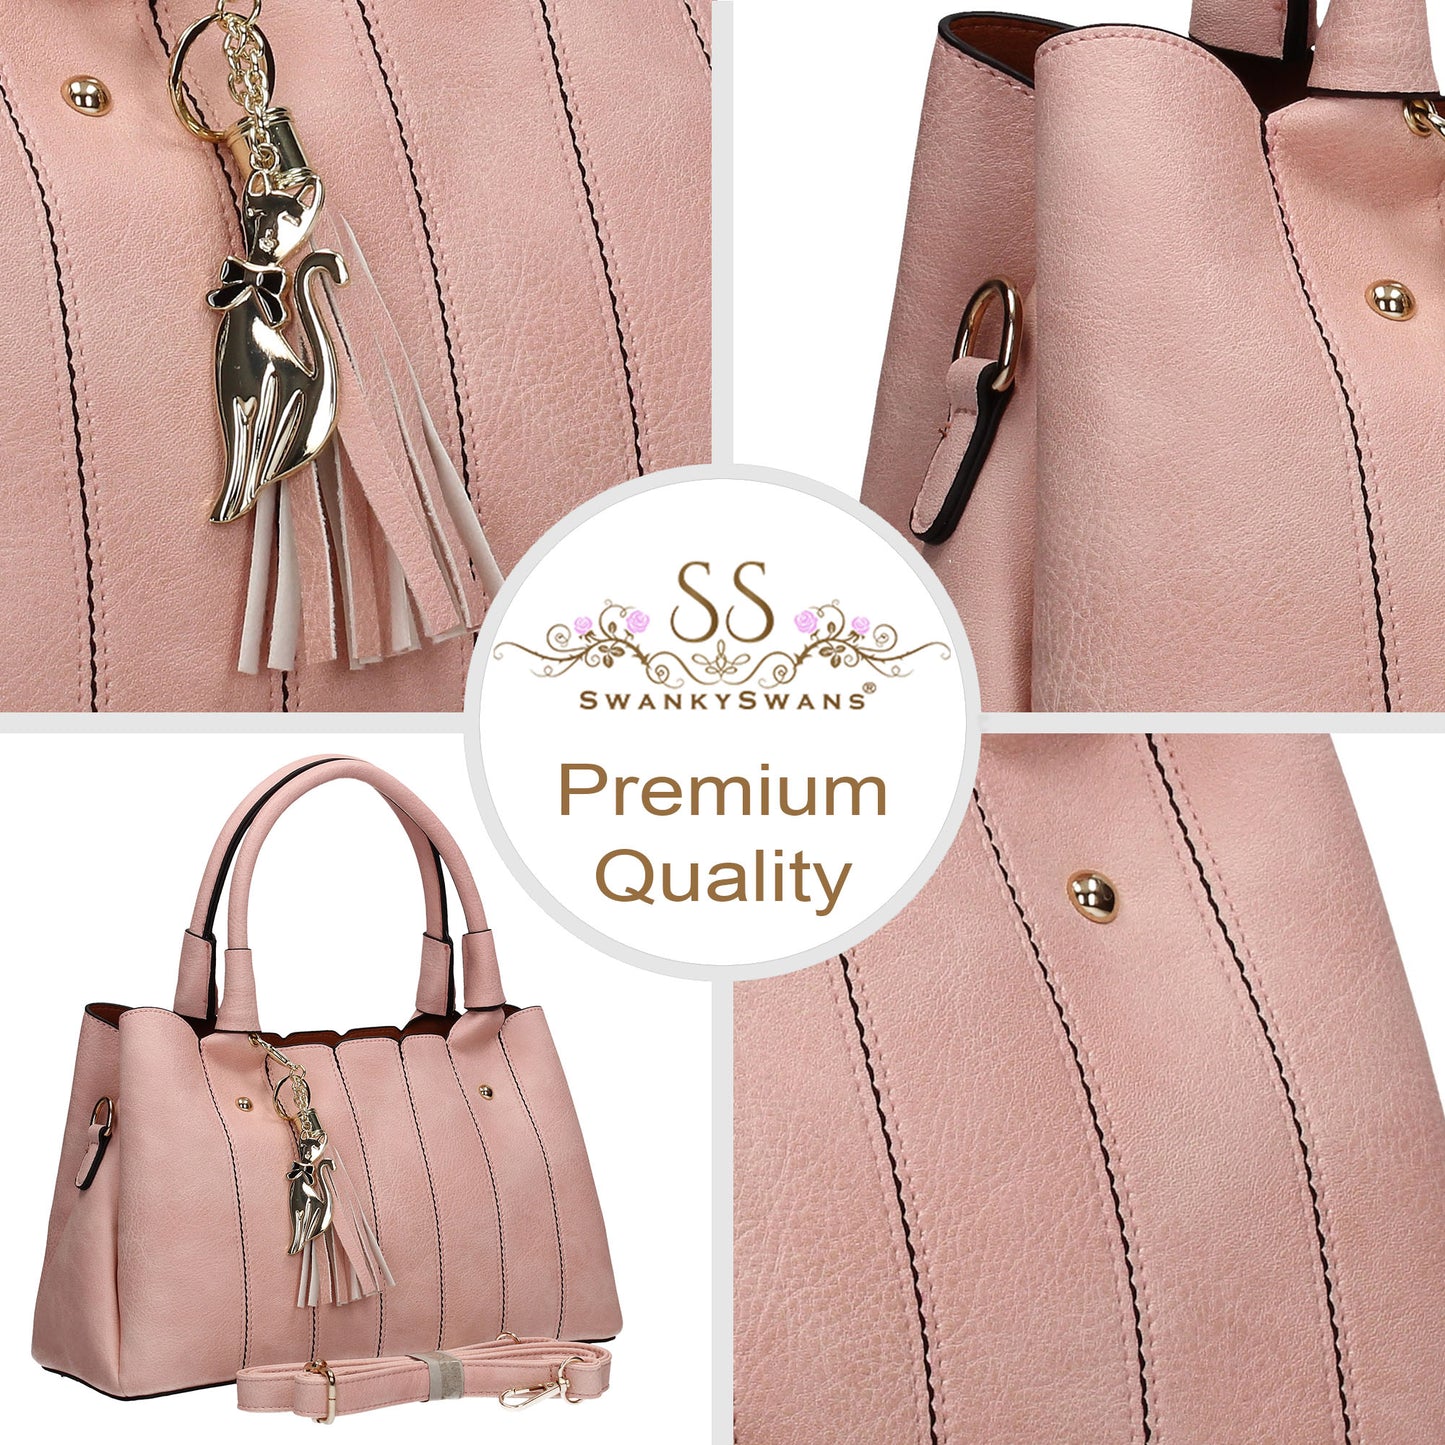 Casey Tassle Handbag Pale PinkBeautiful Cute Animal Faux Leather Clutch Bag Handles Strap Summer School